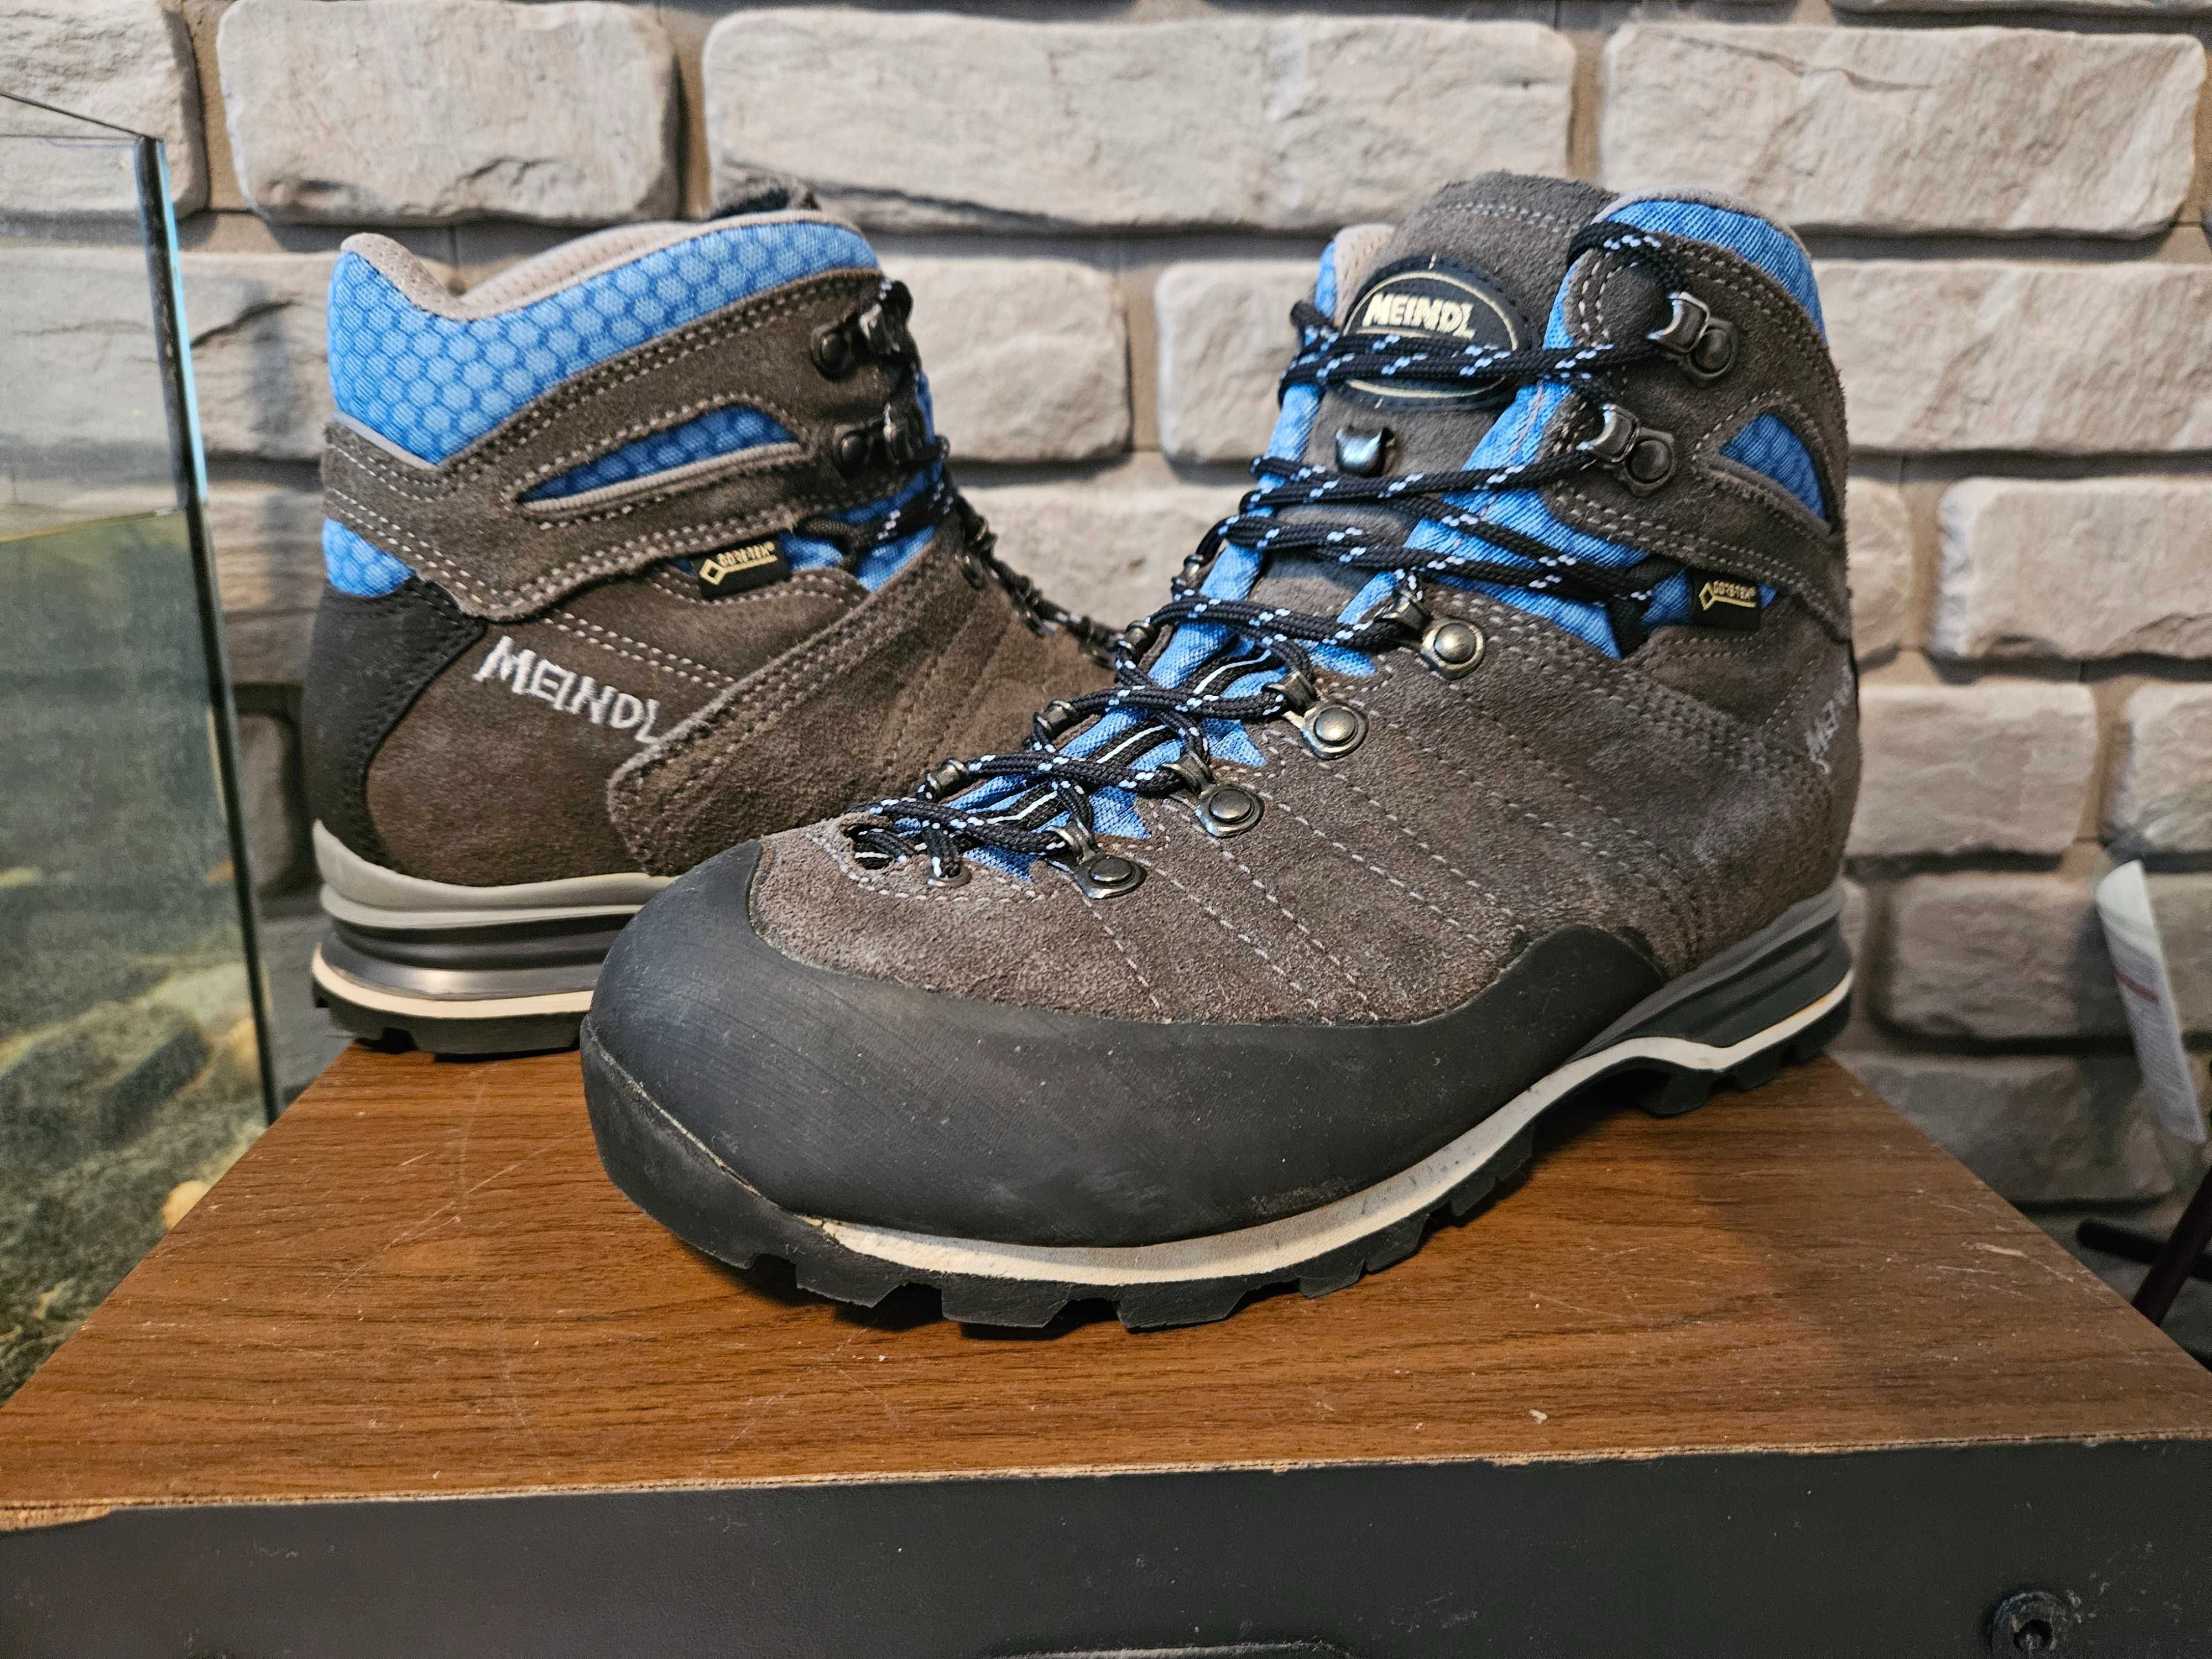 MEINDL ANTELAO GTX buty trekkingowe damskie 41 gore tex jak nowe!